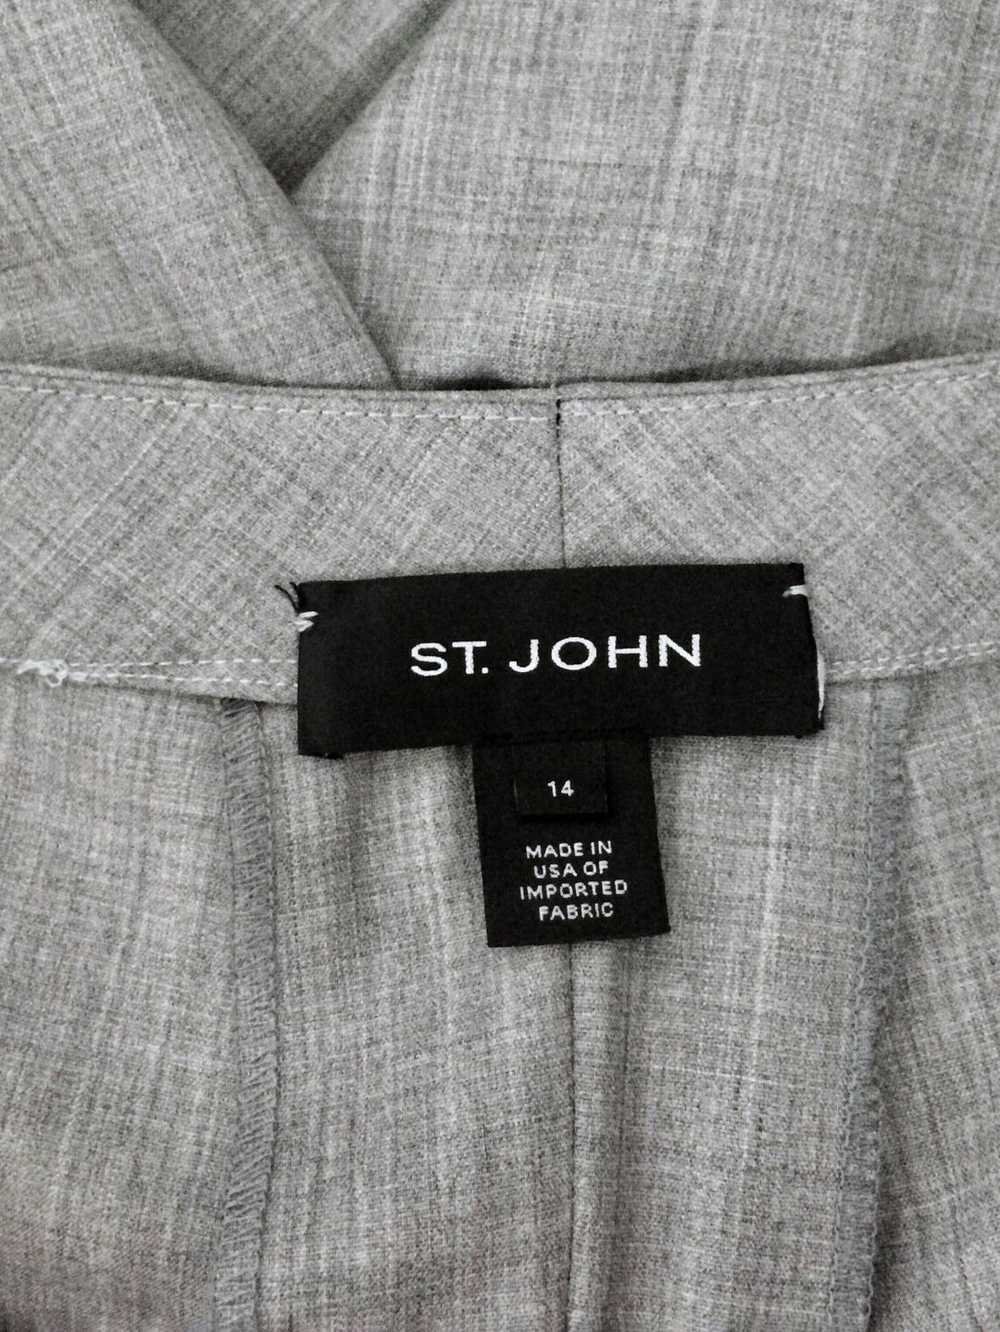 St. John Size 14 Gray Solid Pants - image 7